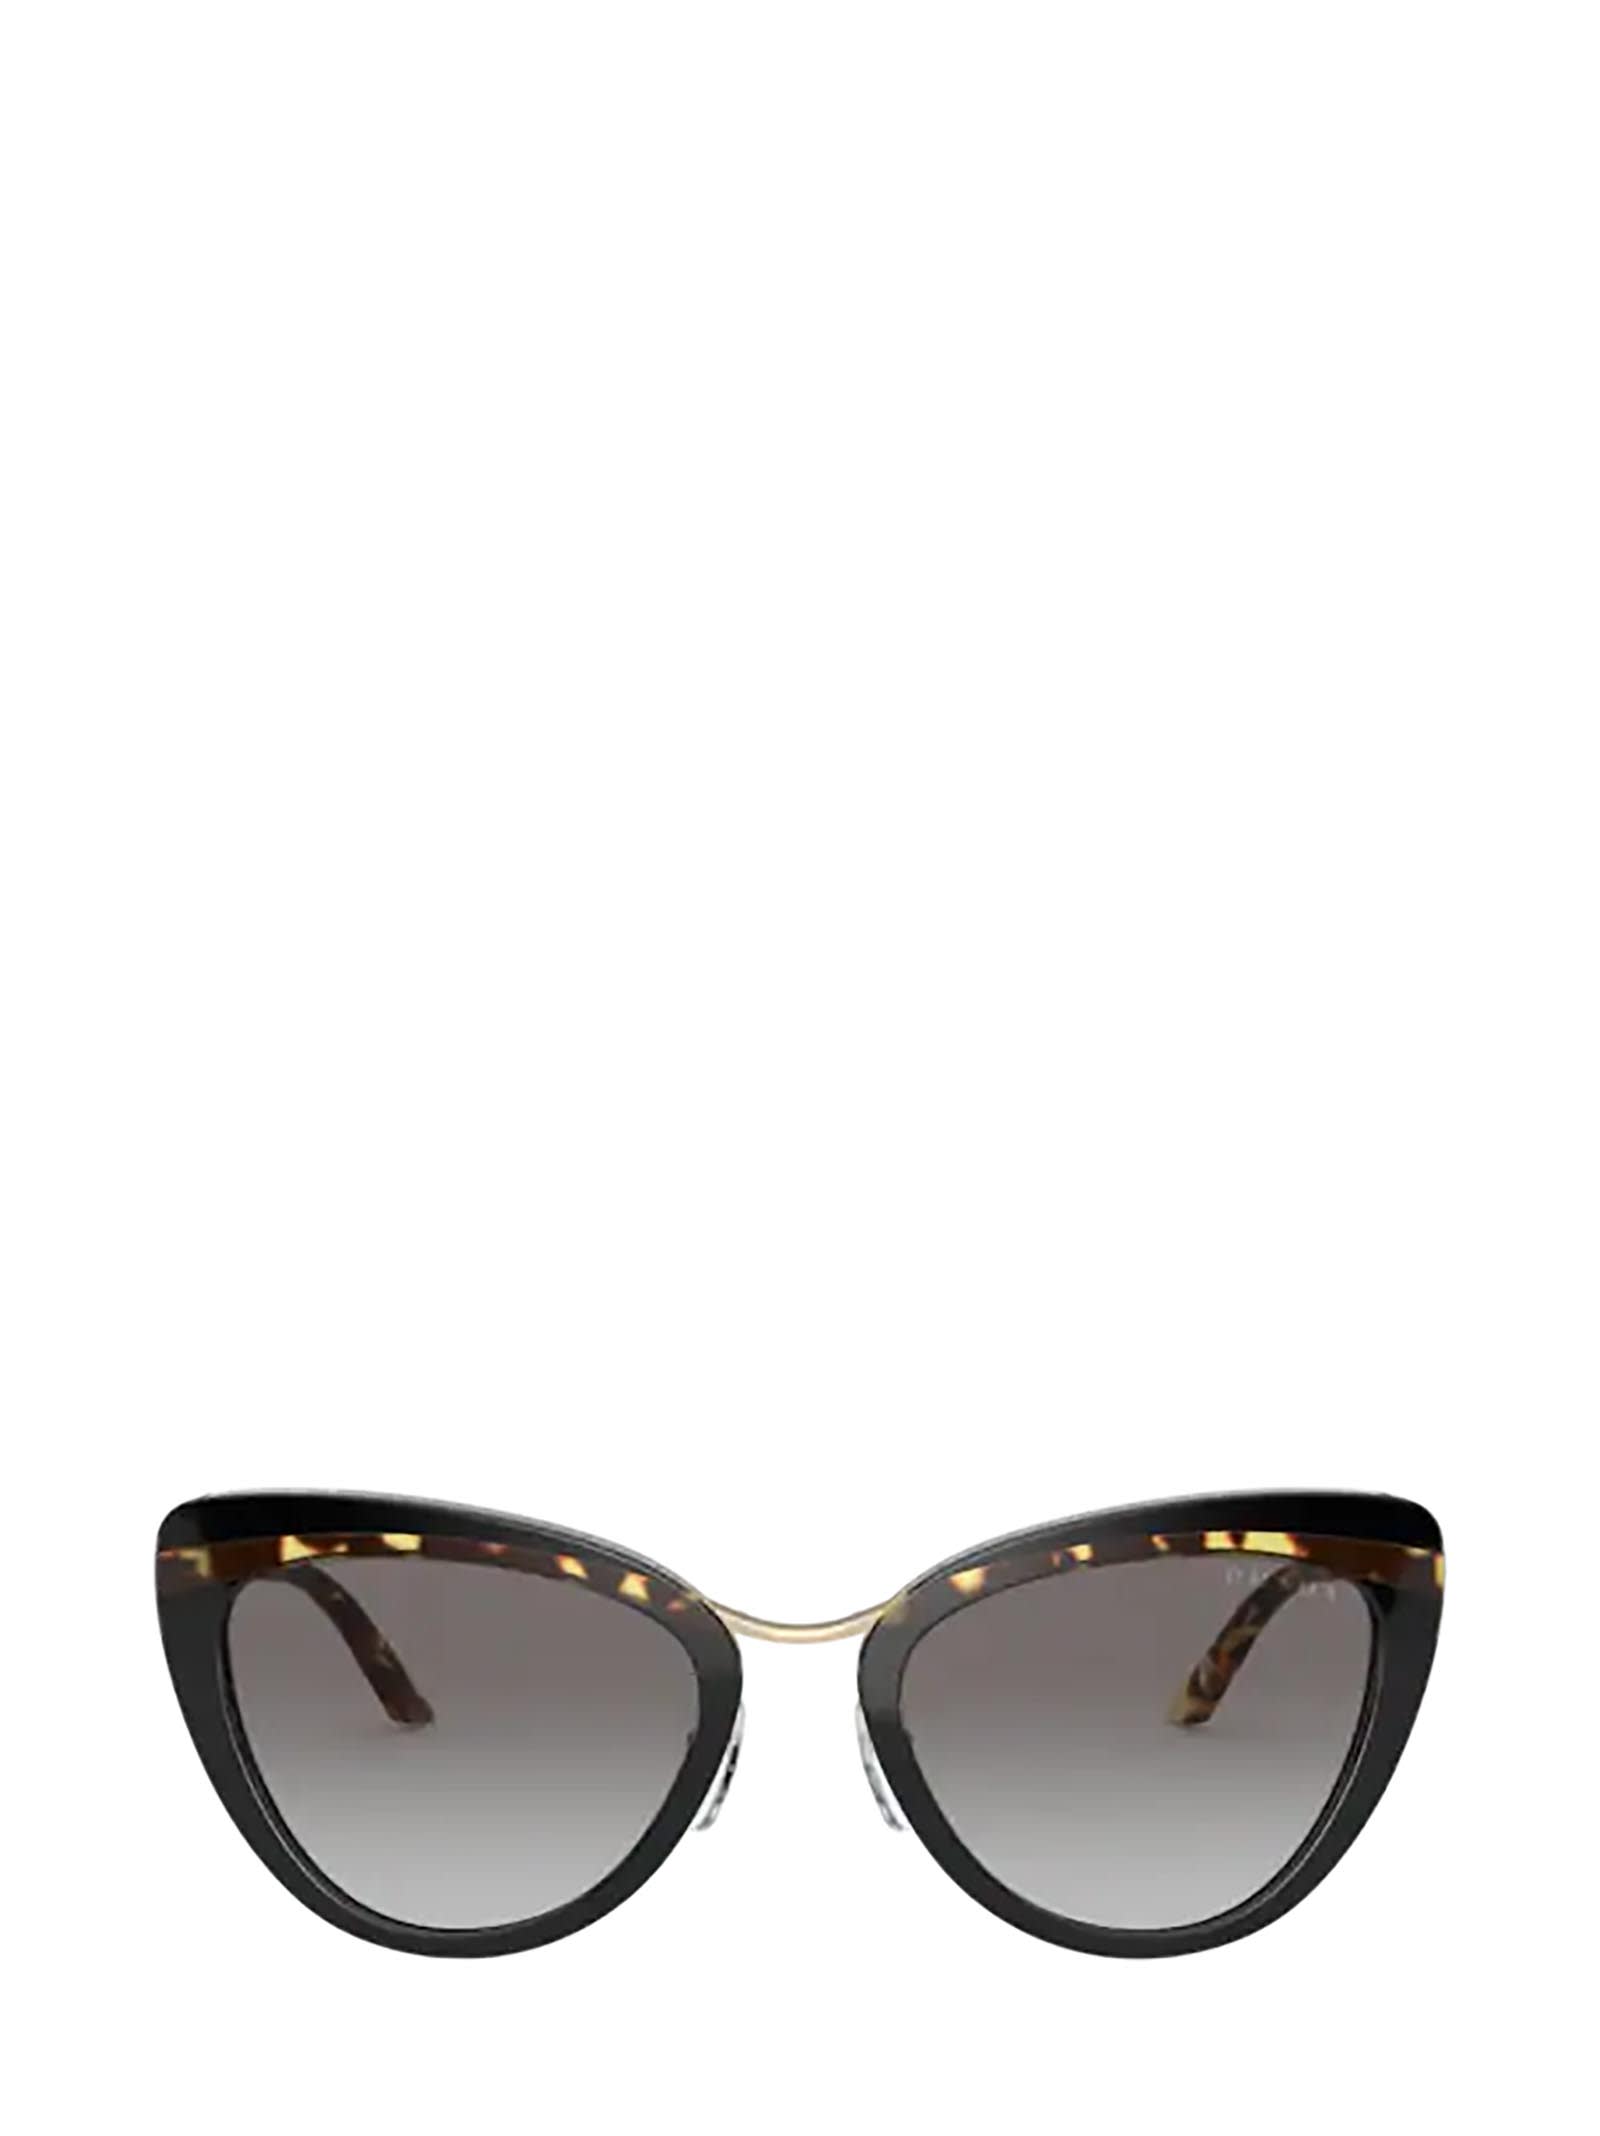 Prada Prada Pr 25xs Black / Havana / Black Sunglasses